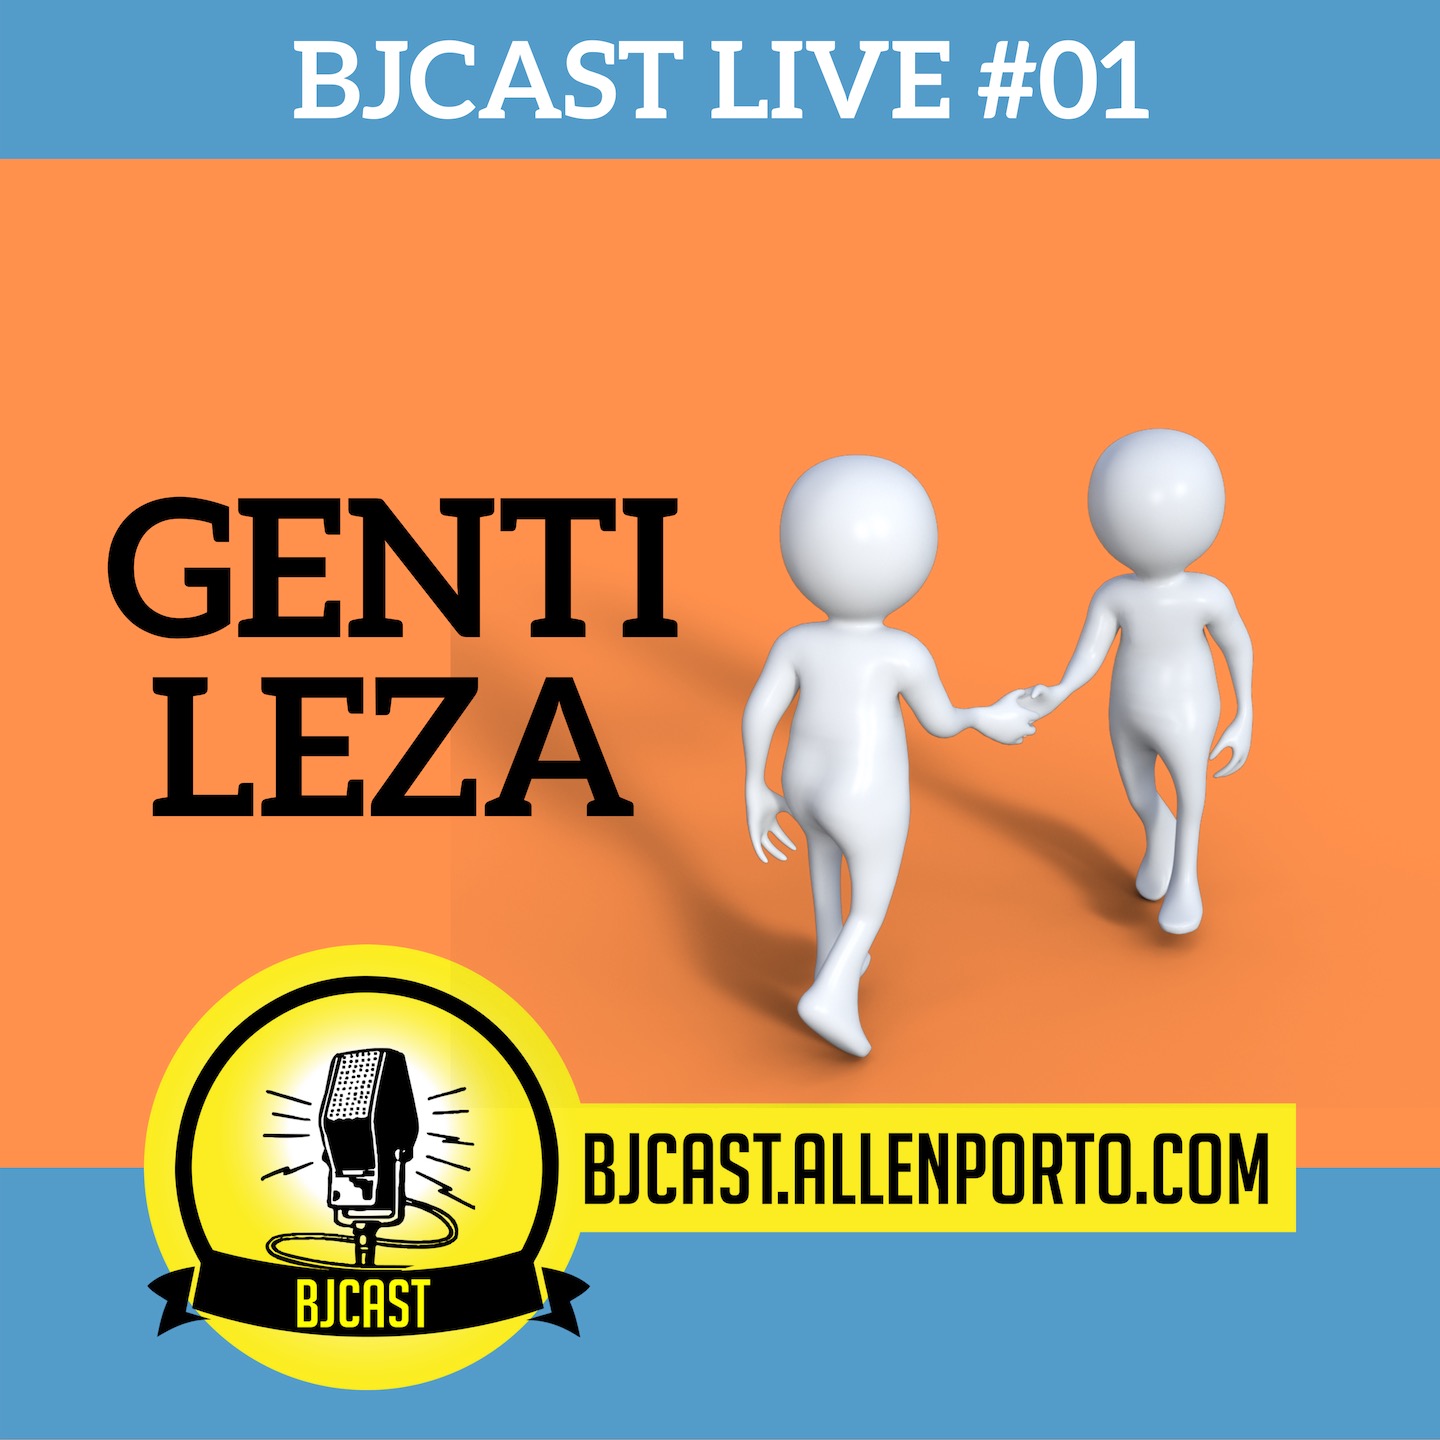 BJCast Live #01 - Gentileza